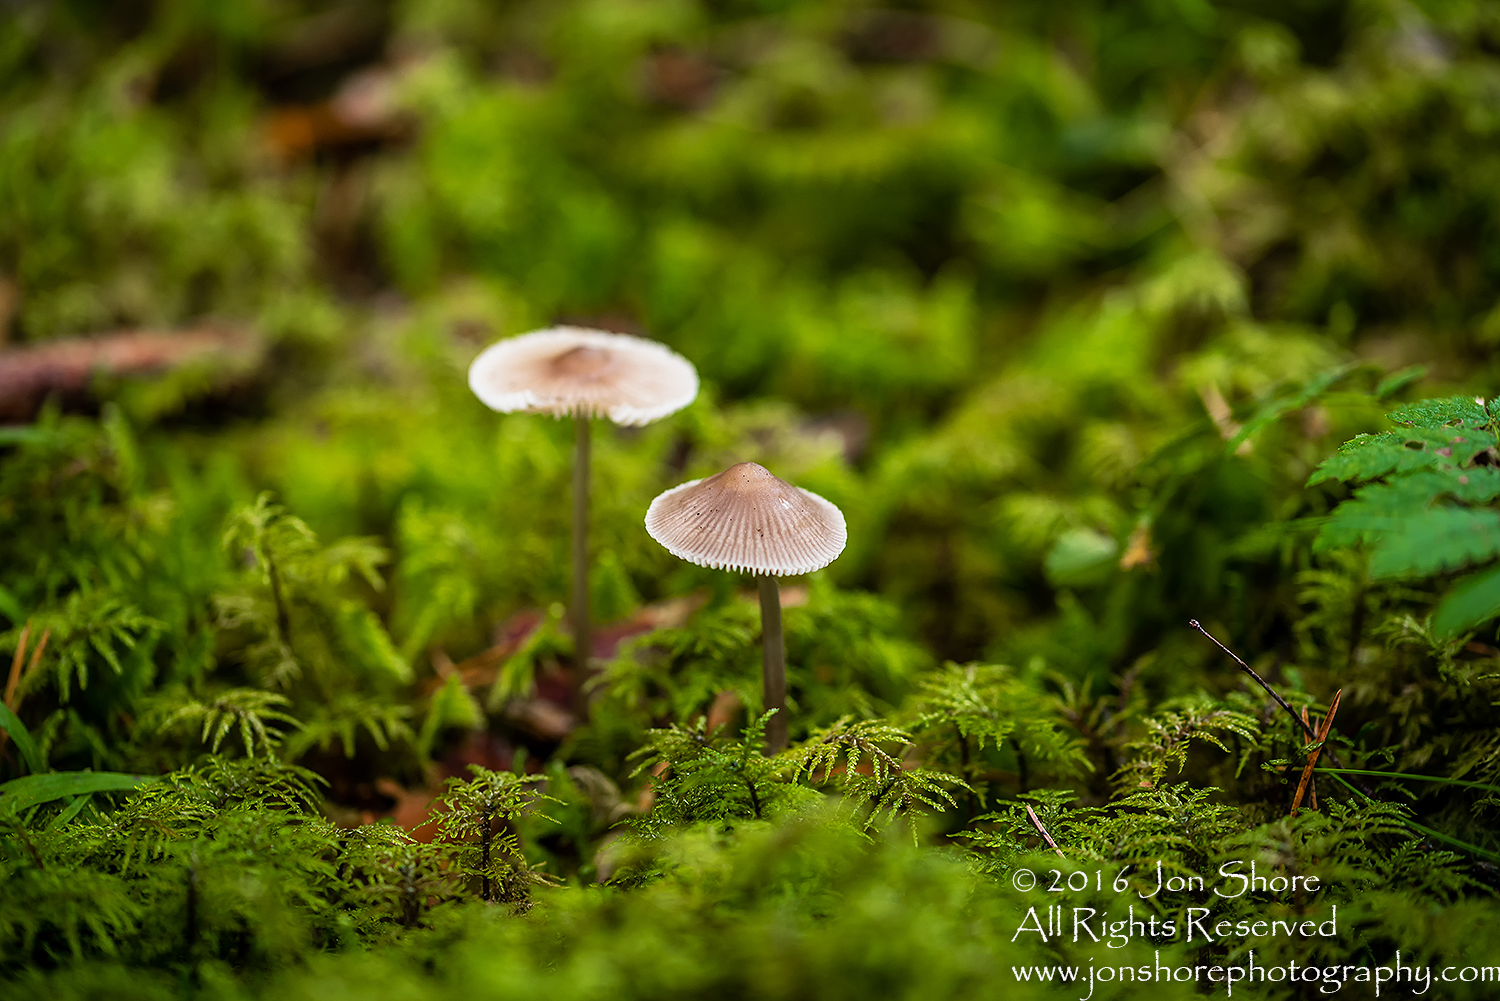 Wild Mushroom Close-up - Roja, Latvia. Tamron 90mm Macro lens